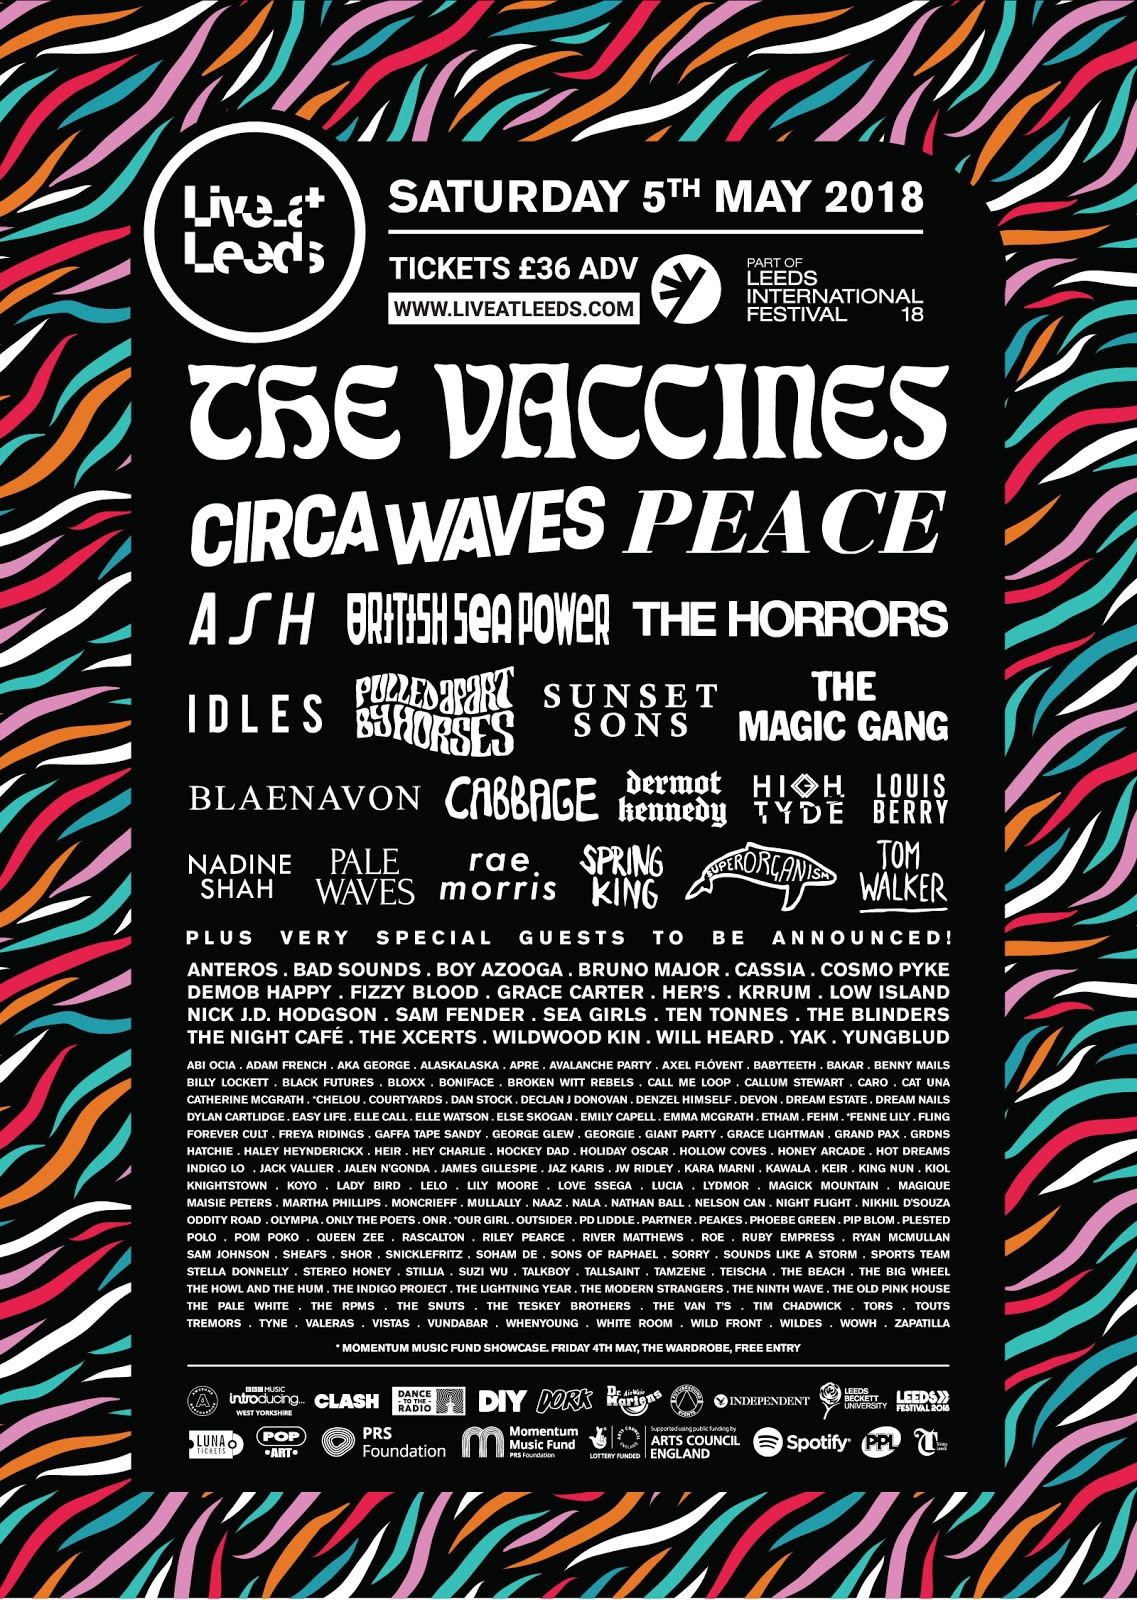 Live At Leeds 2018 2nd line up poster